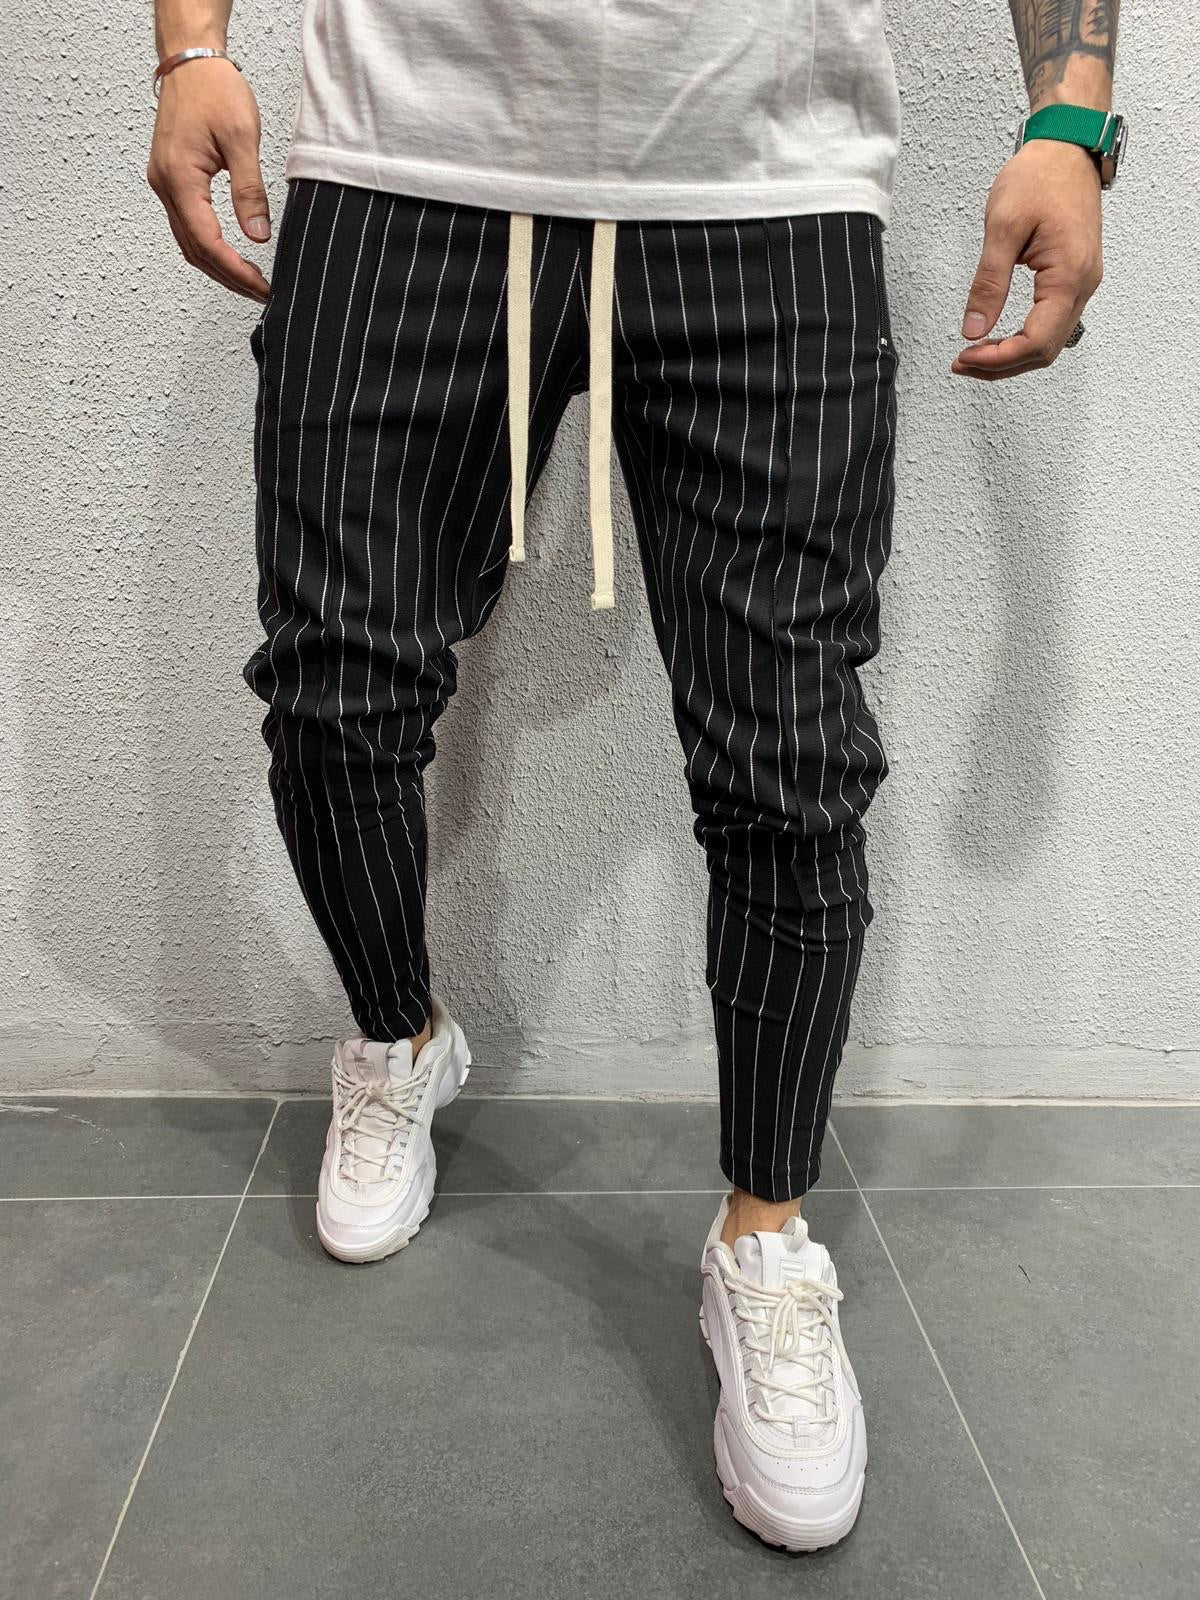 mens black striped pants